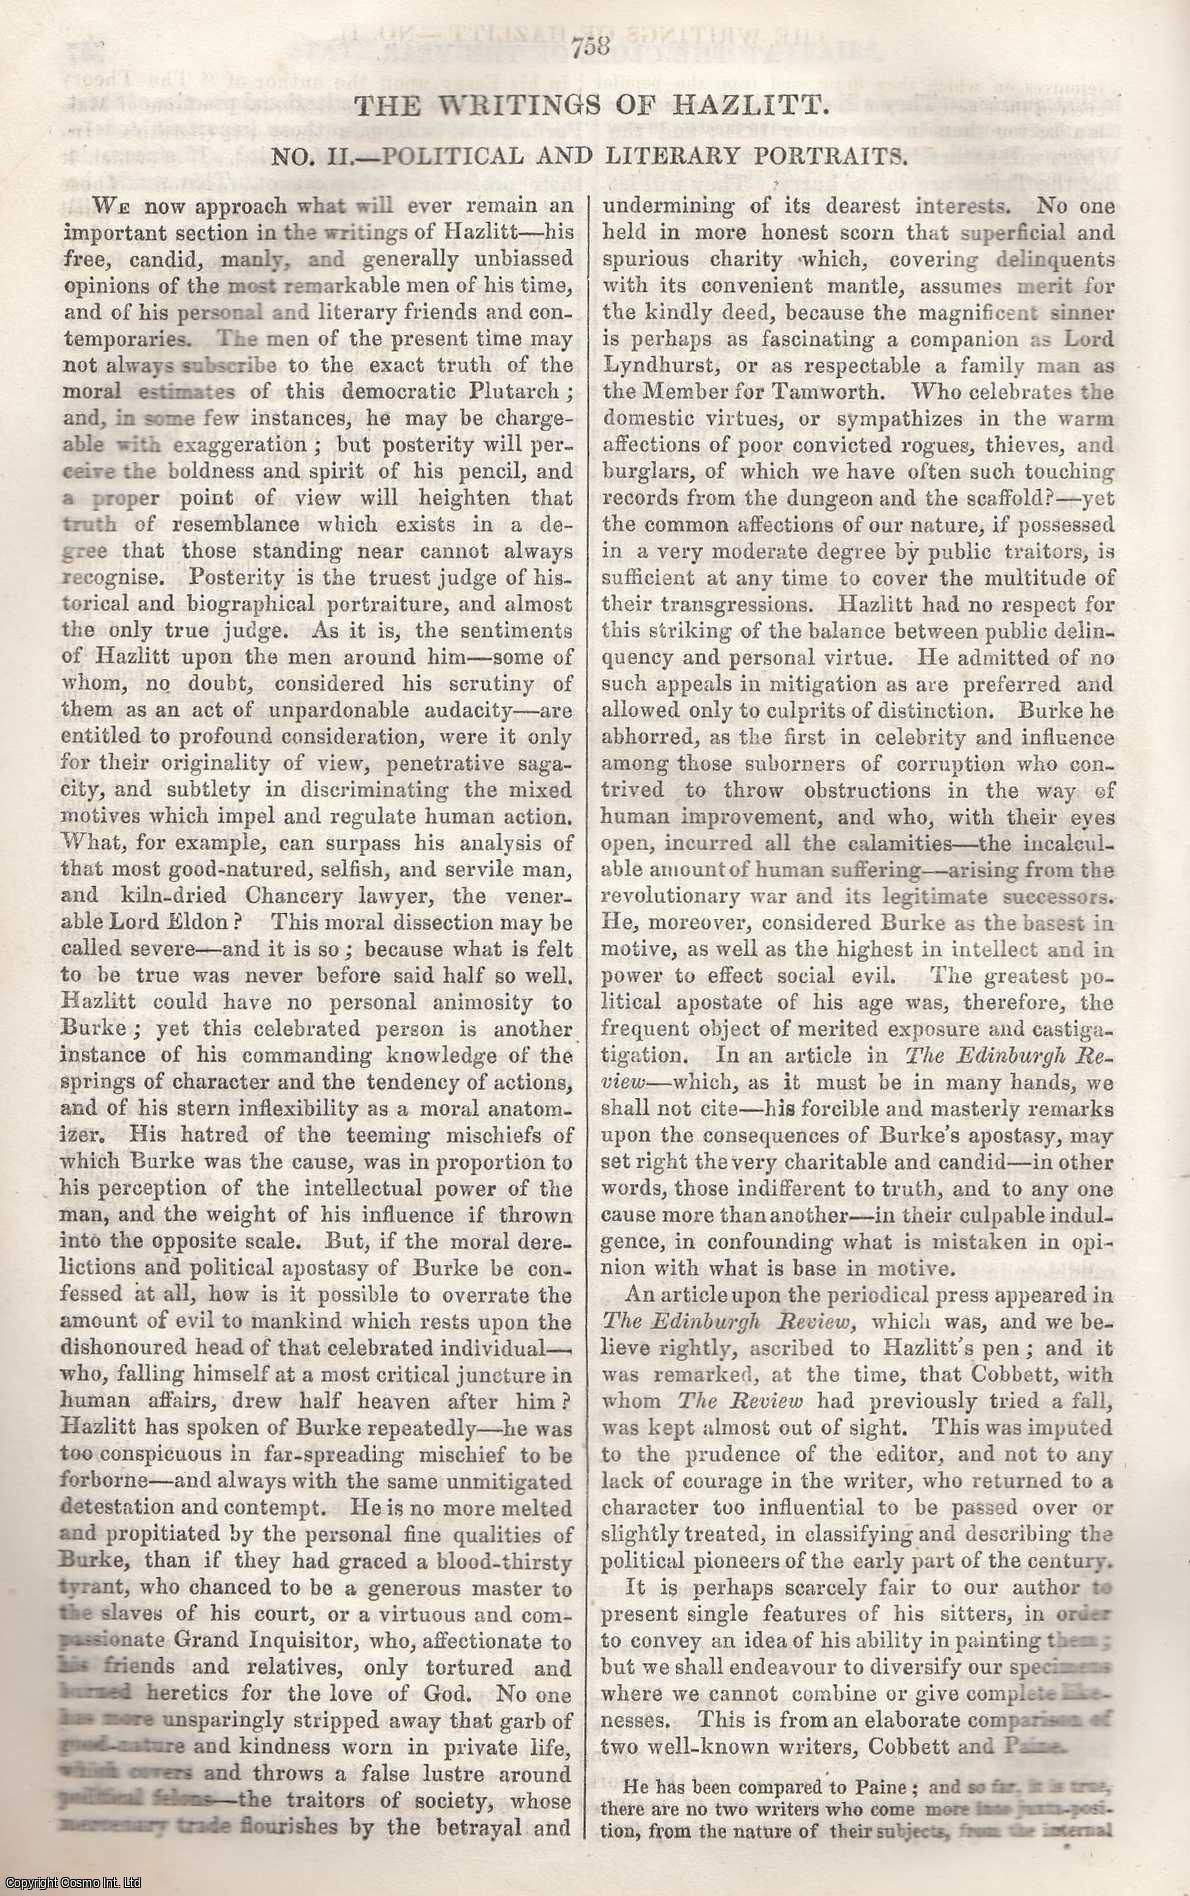 Johnstone, Christian - The Writings of Hazlitt (No. 2): Political and Literary Portraits. An original article from Tait's Edinburgh Magazine, 1836.